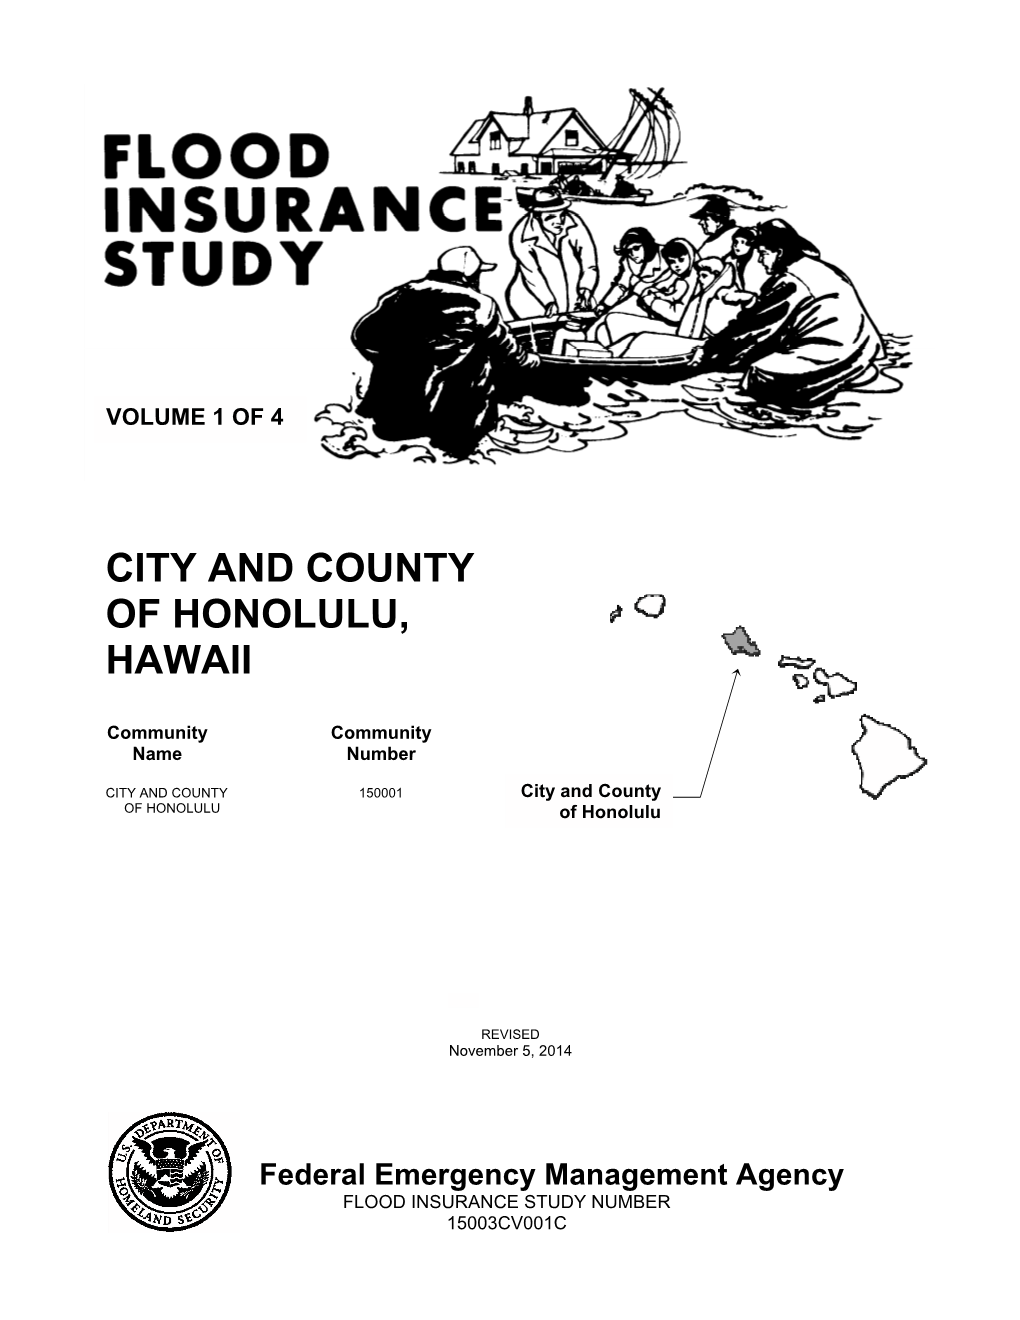 City and County of Honolulu, Hawaii